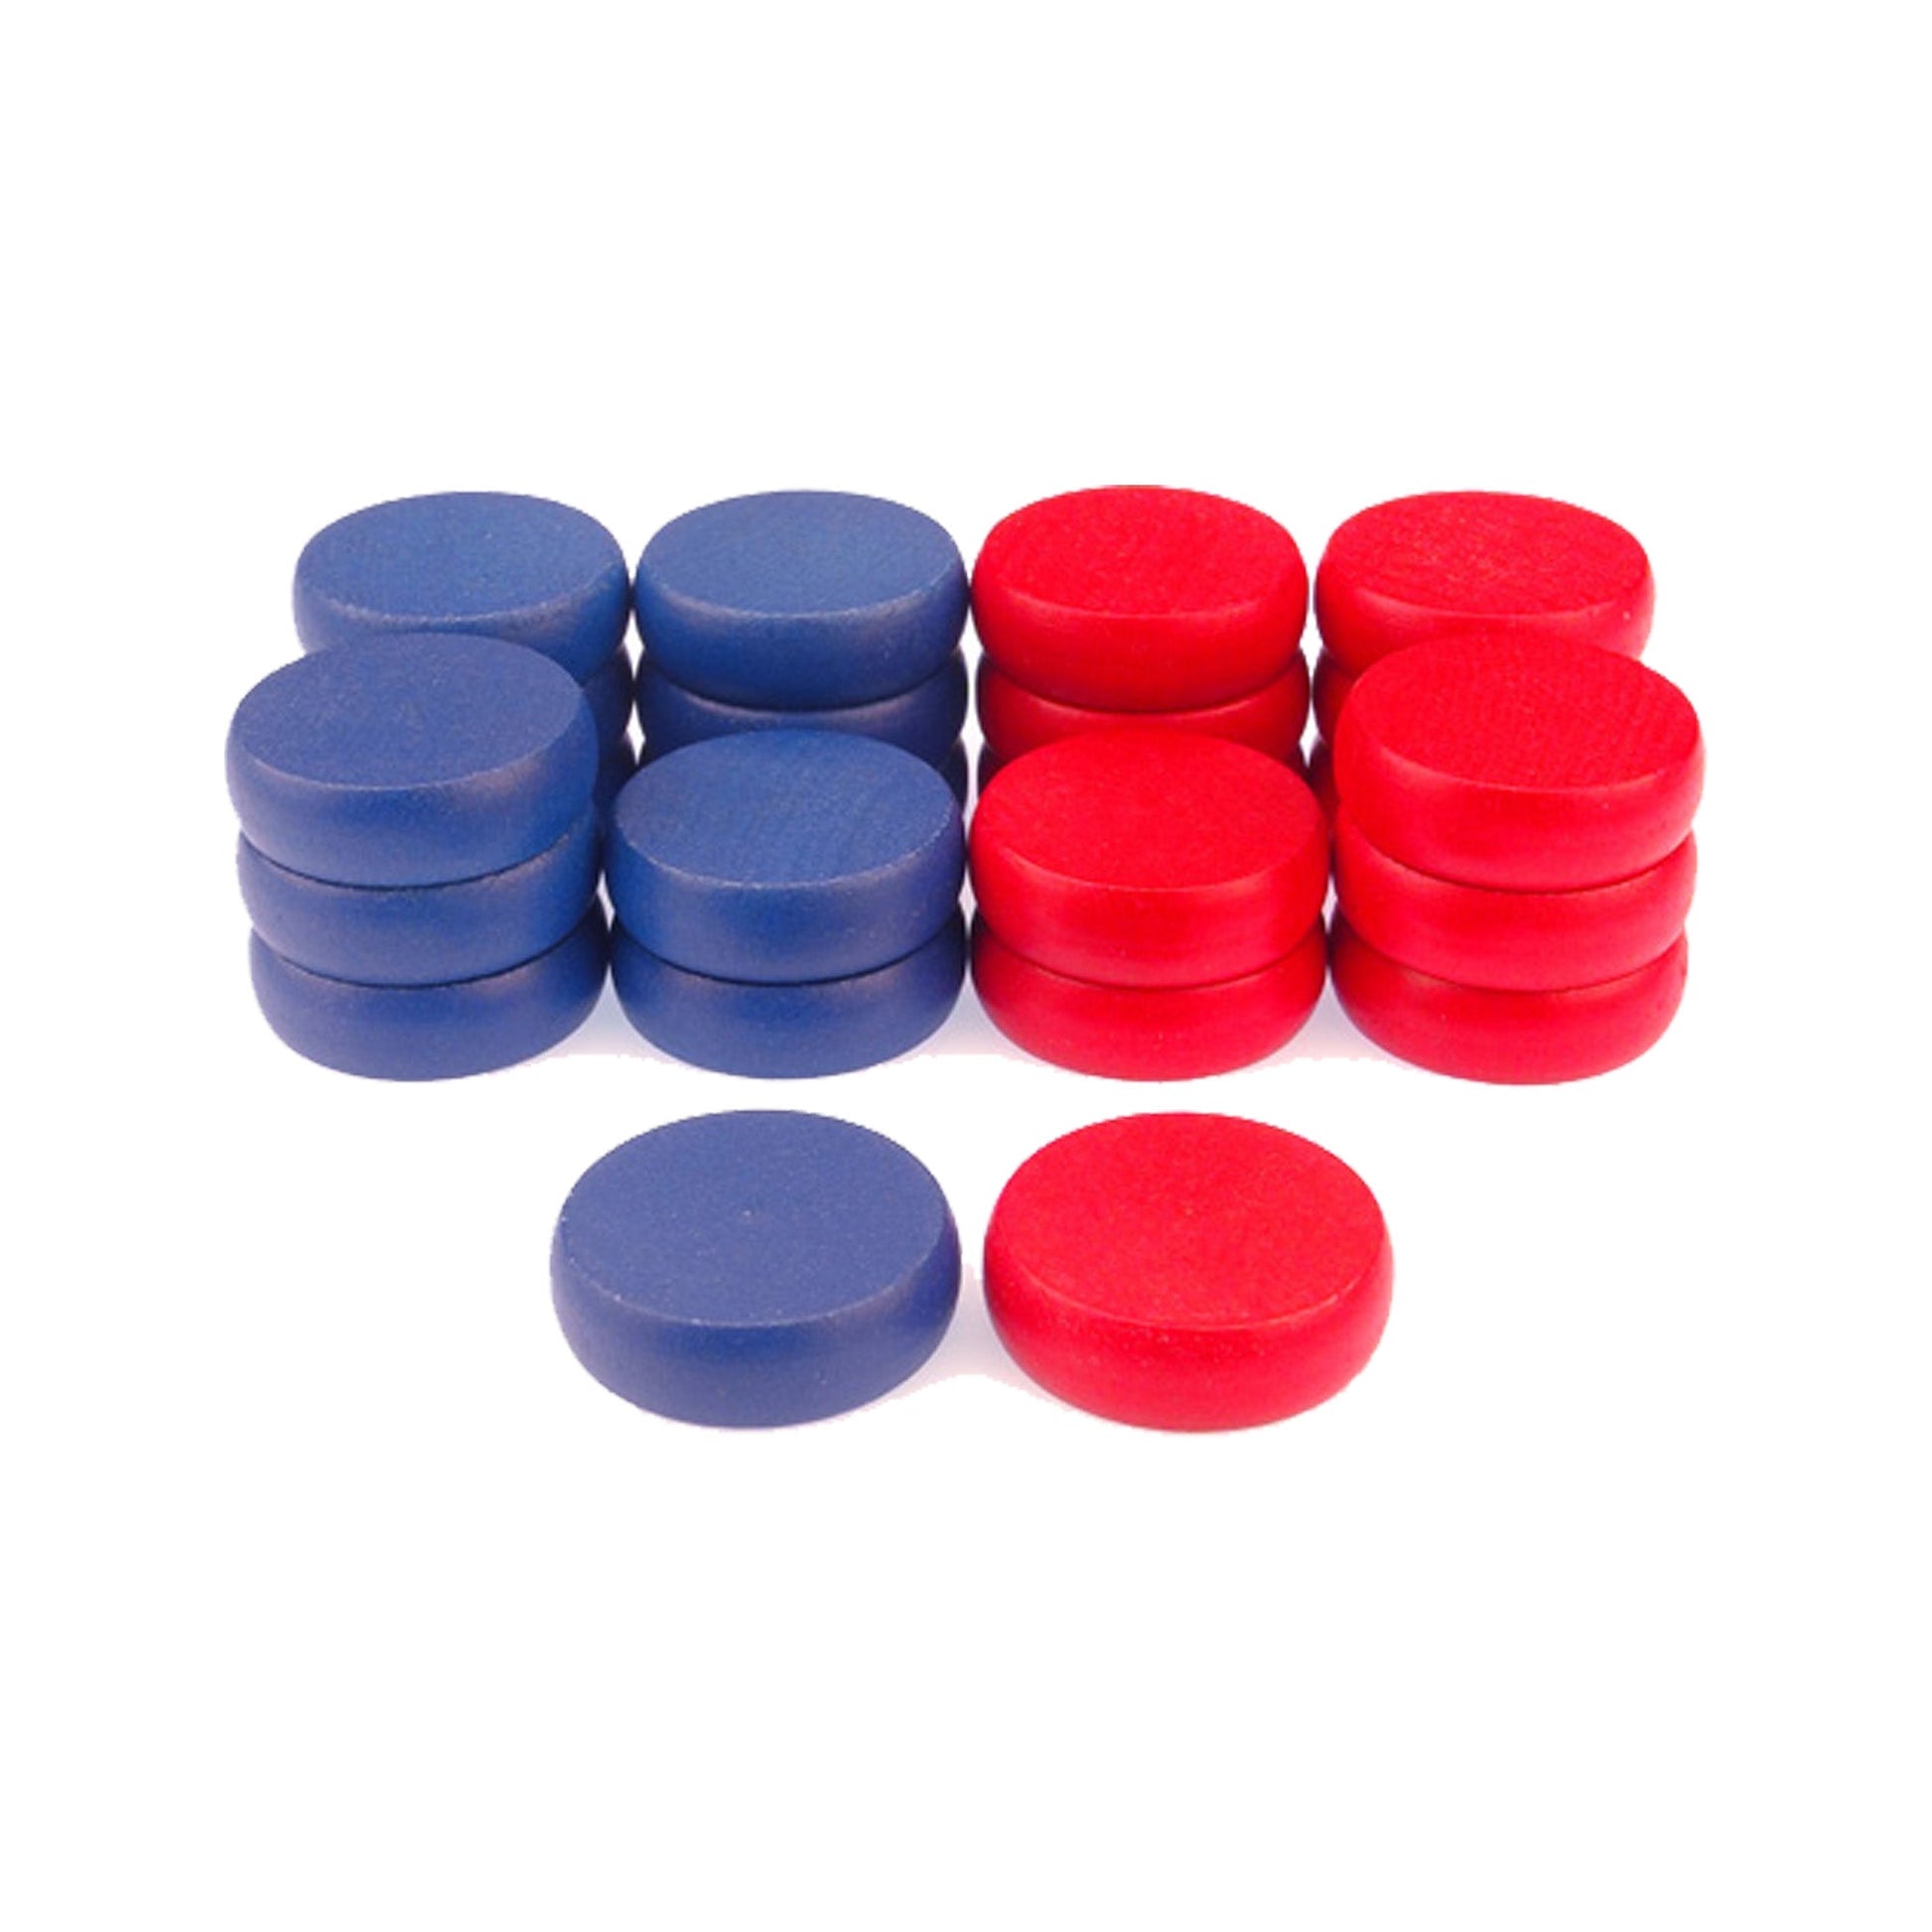 26 Blue & Red Crokinole Tournament Discs + Bag (13 Blue & 13 Red) - Crokinole Europe